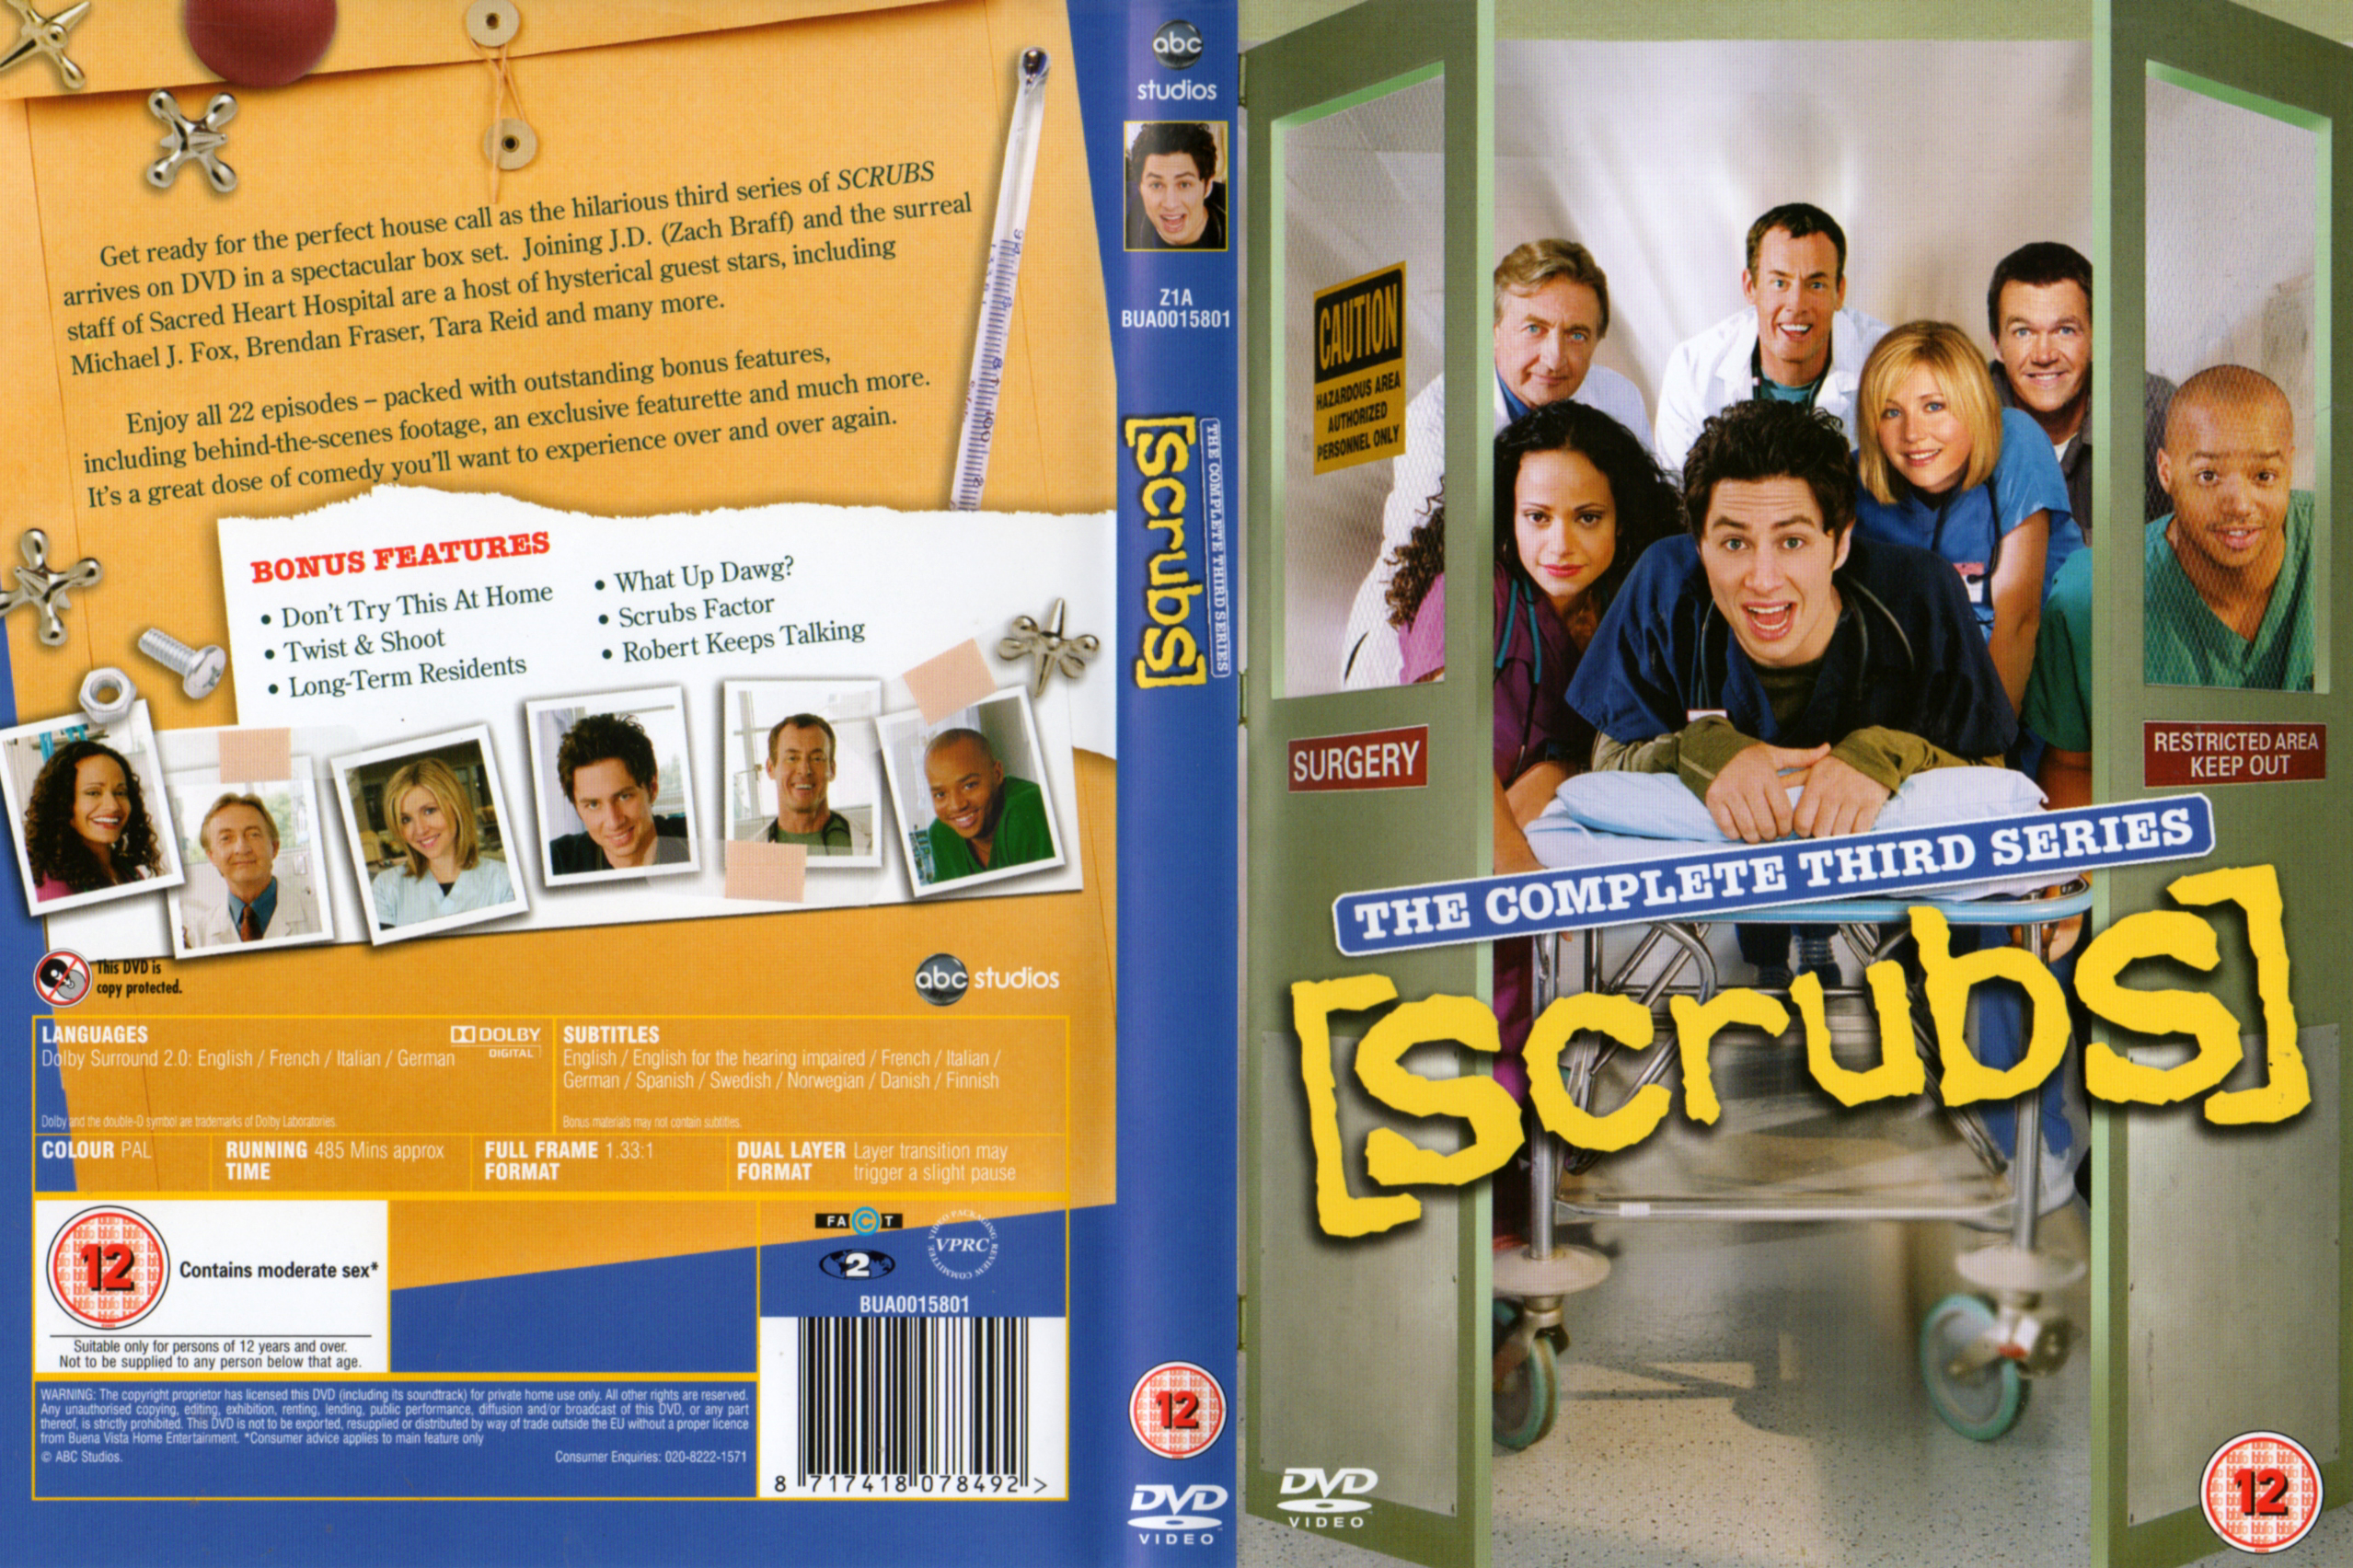 Jaquette DVD Scrubs saison 3 COFFRET Zone 1